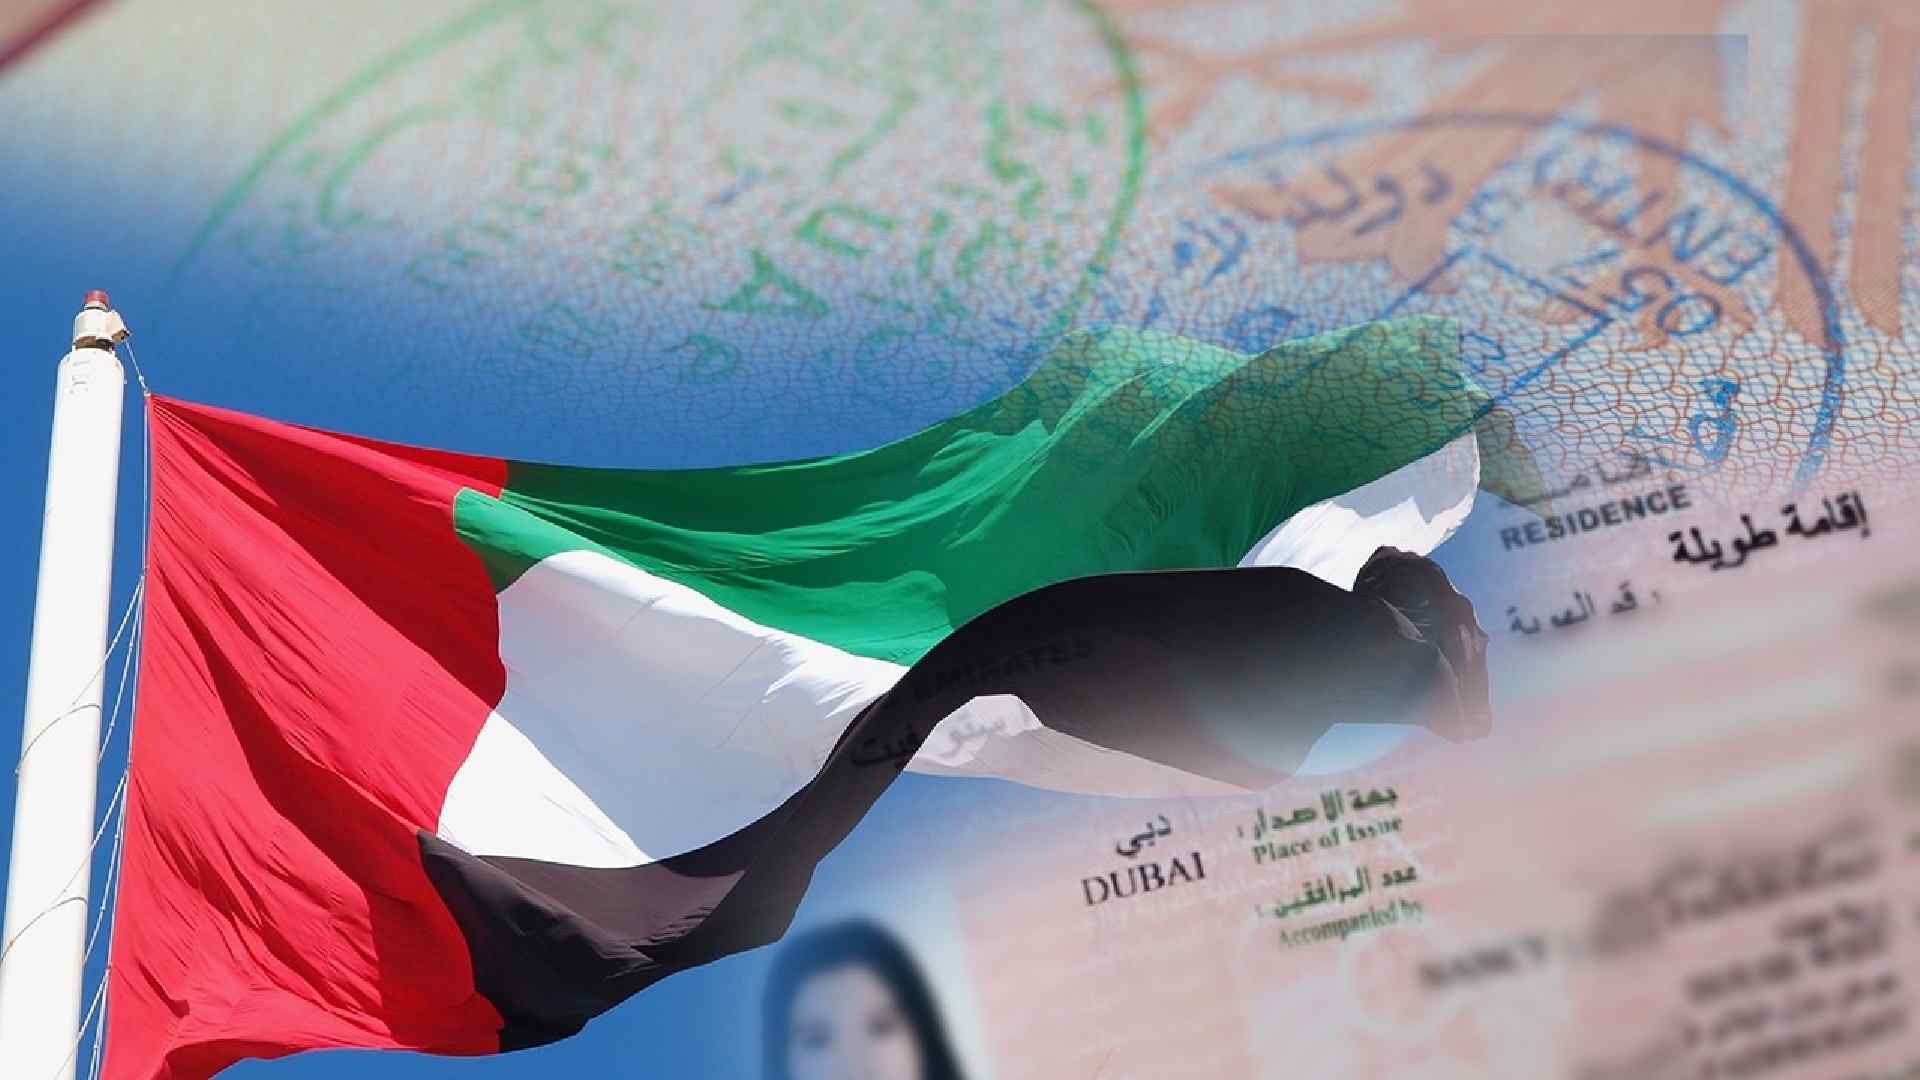 UAE investor visa